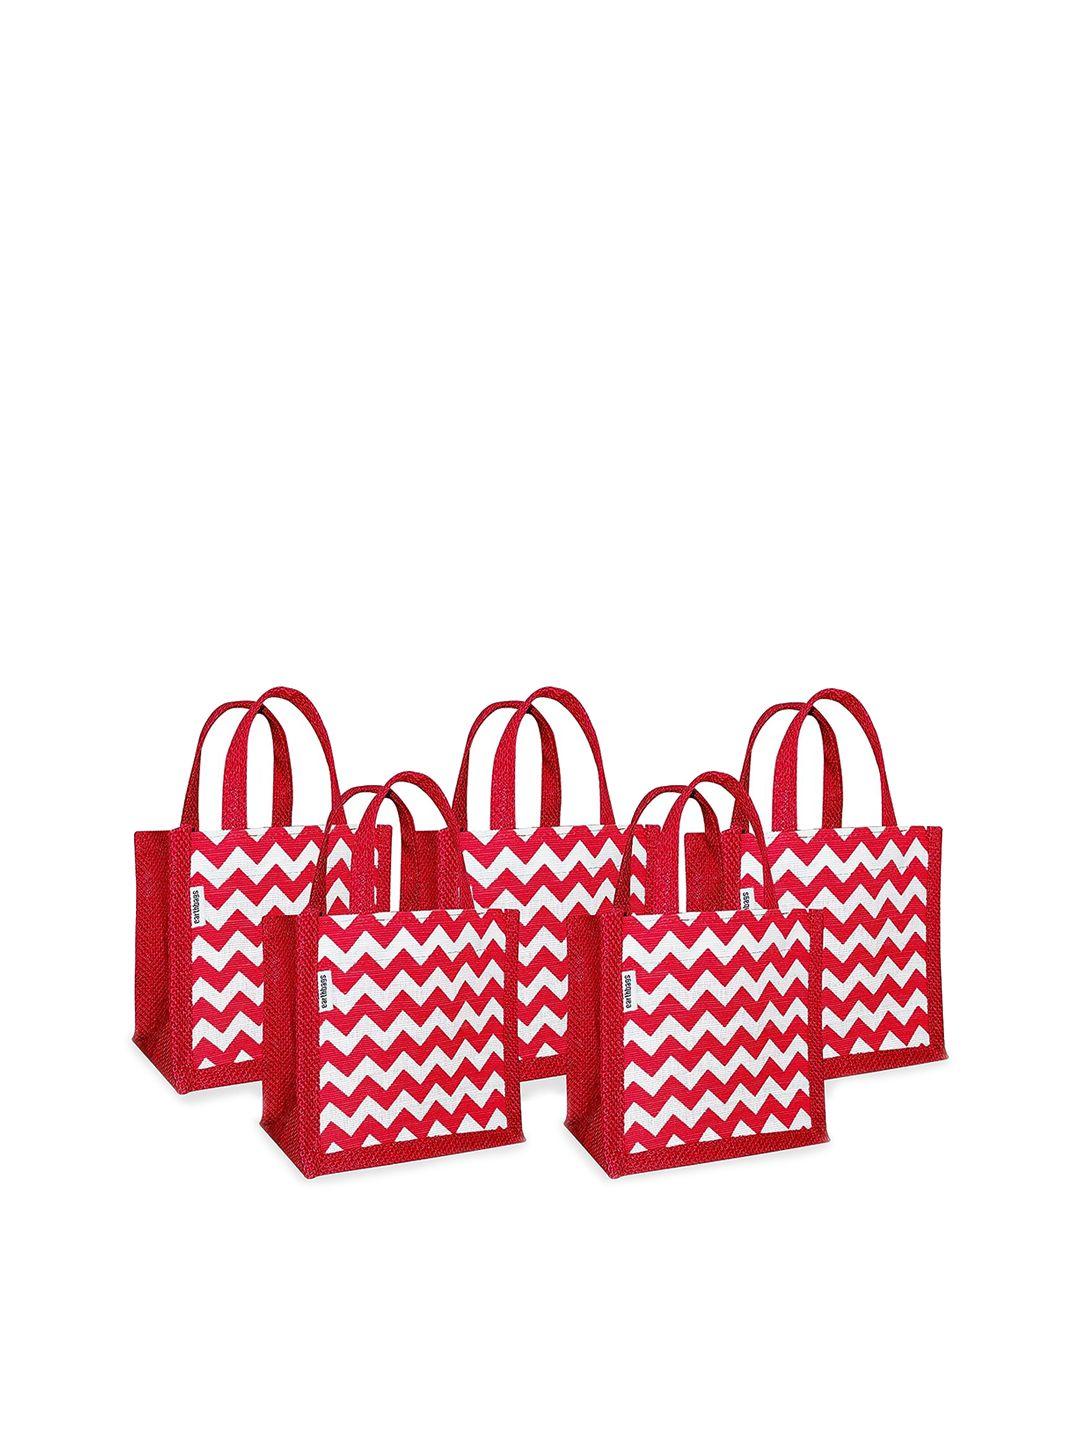 earthbags red geometric shopper tote bag with cut work